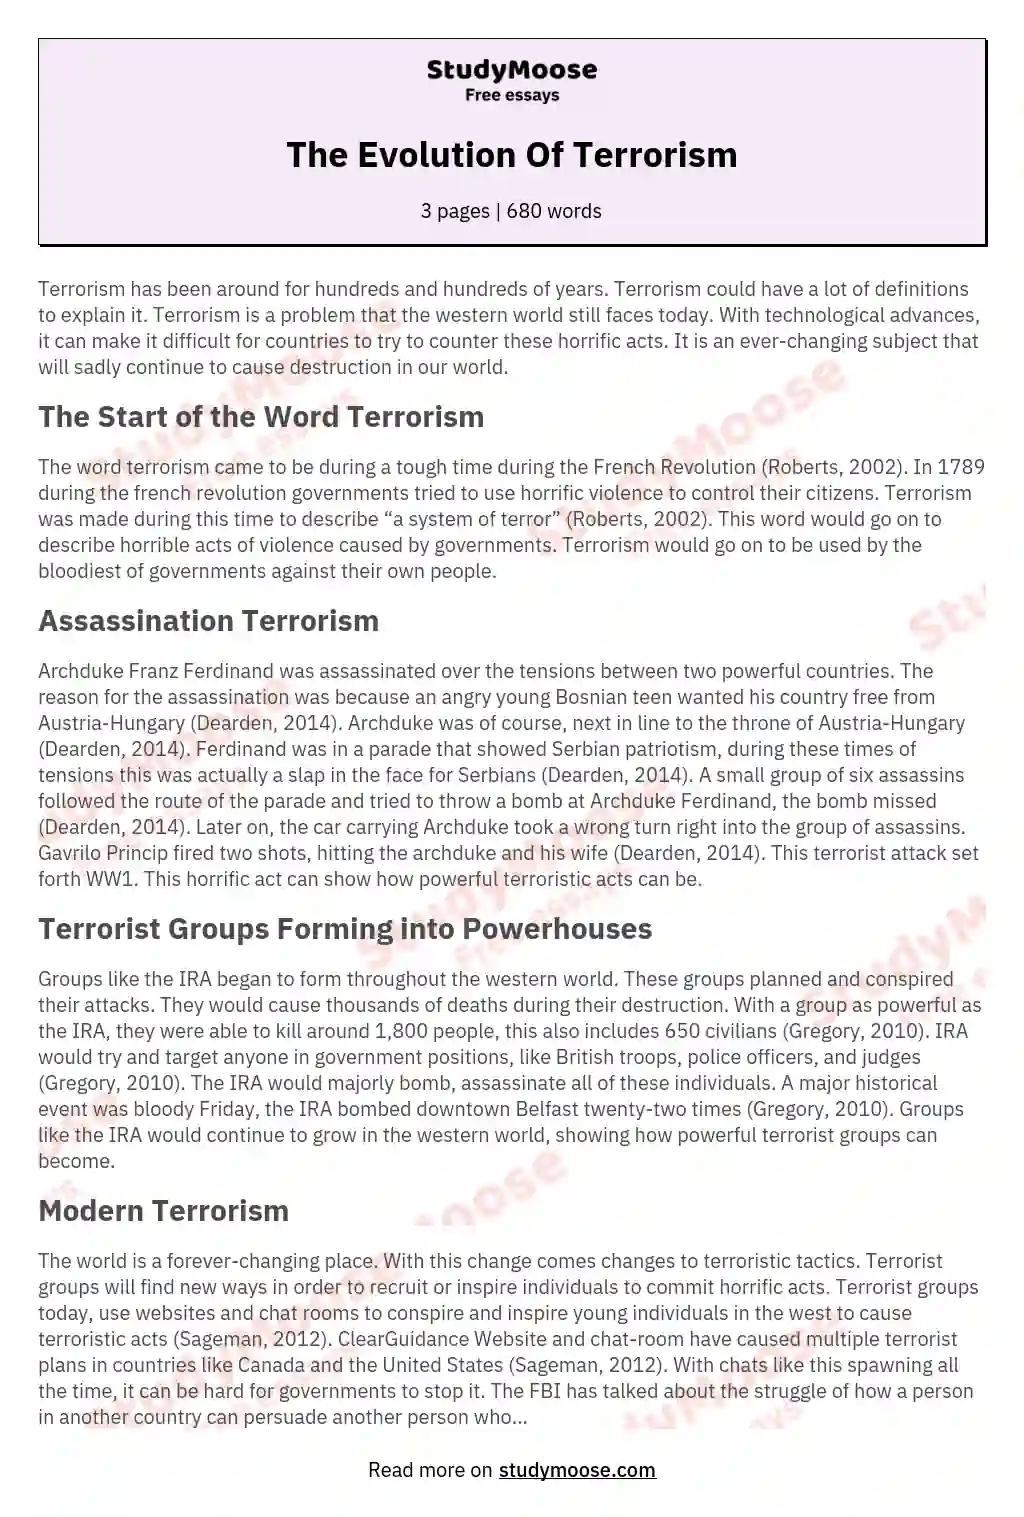 terrorism essay in english 100 words